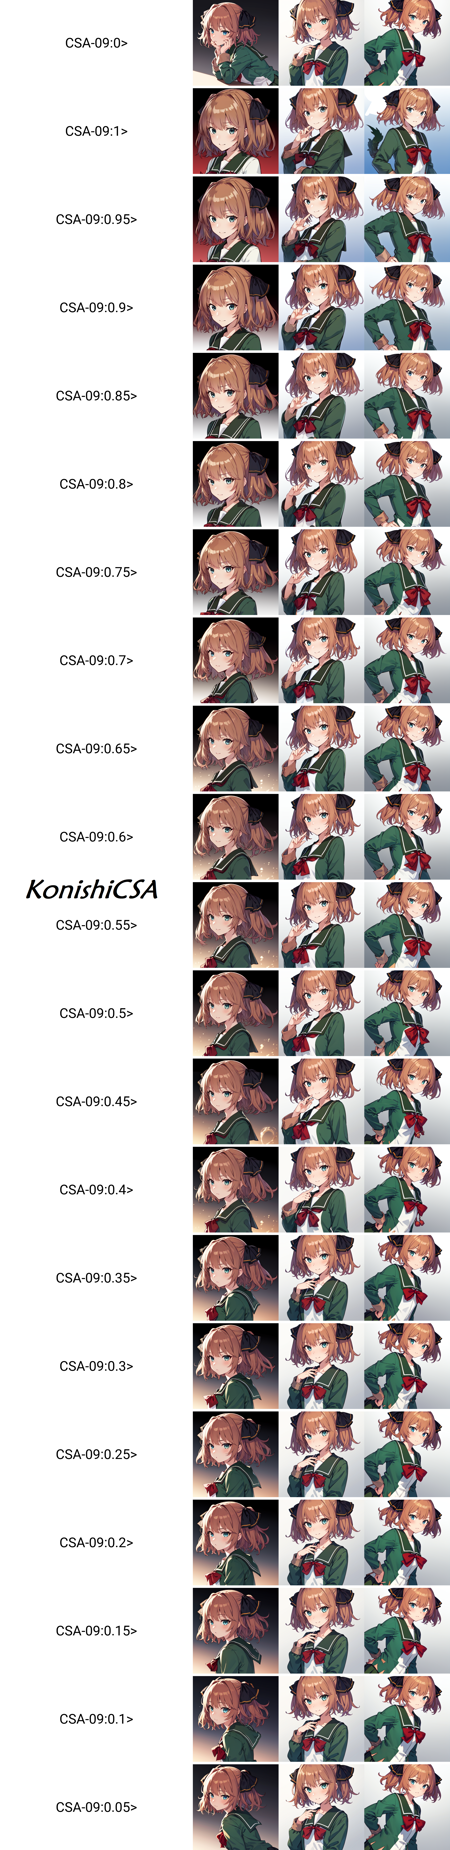 KonishiCSA_weight.png